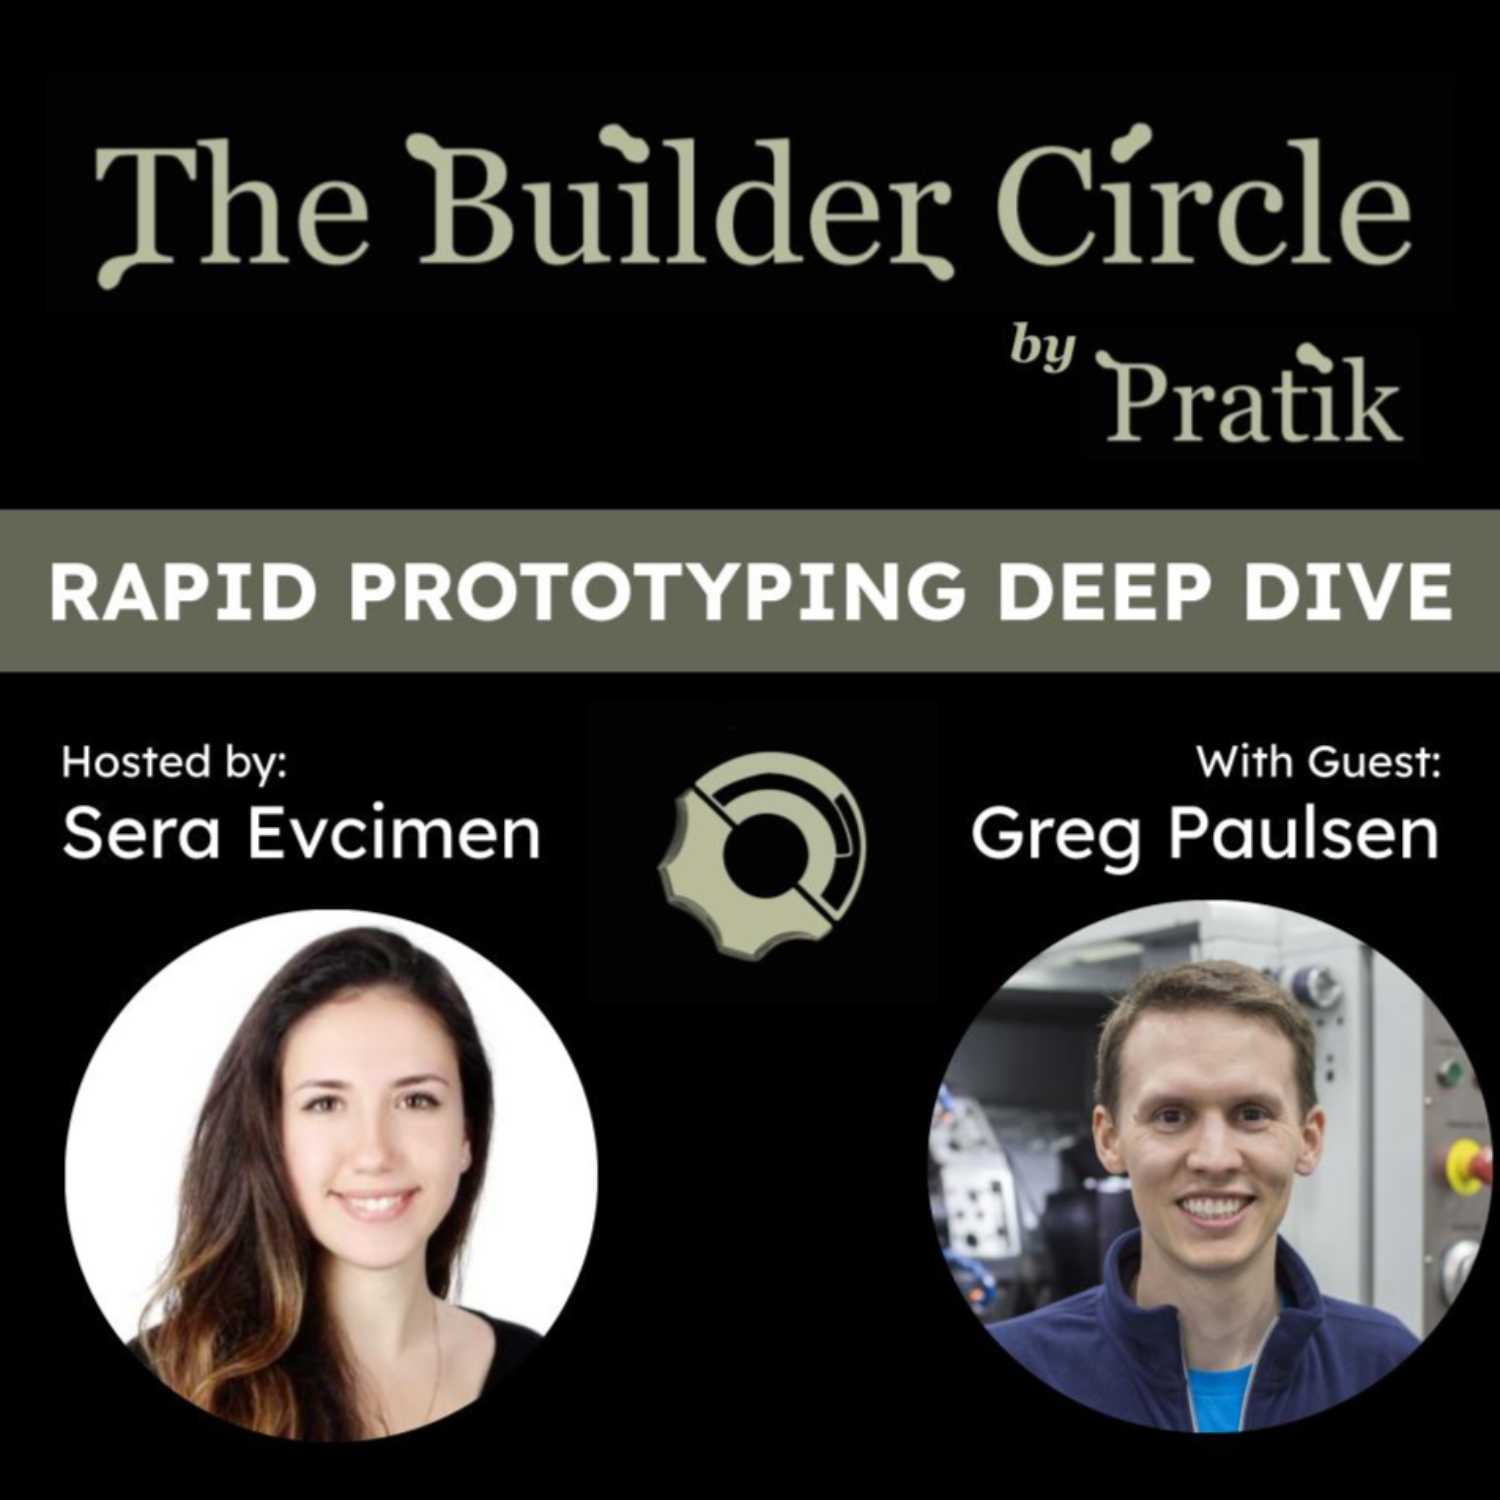 S2 E5: Rapid Prototyping Deep Dive with Greg Paulsen